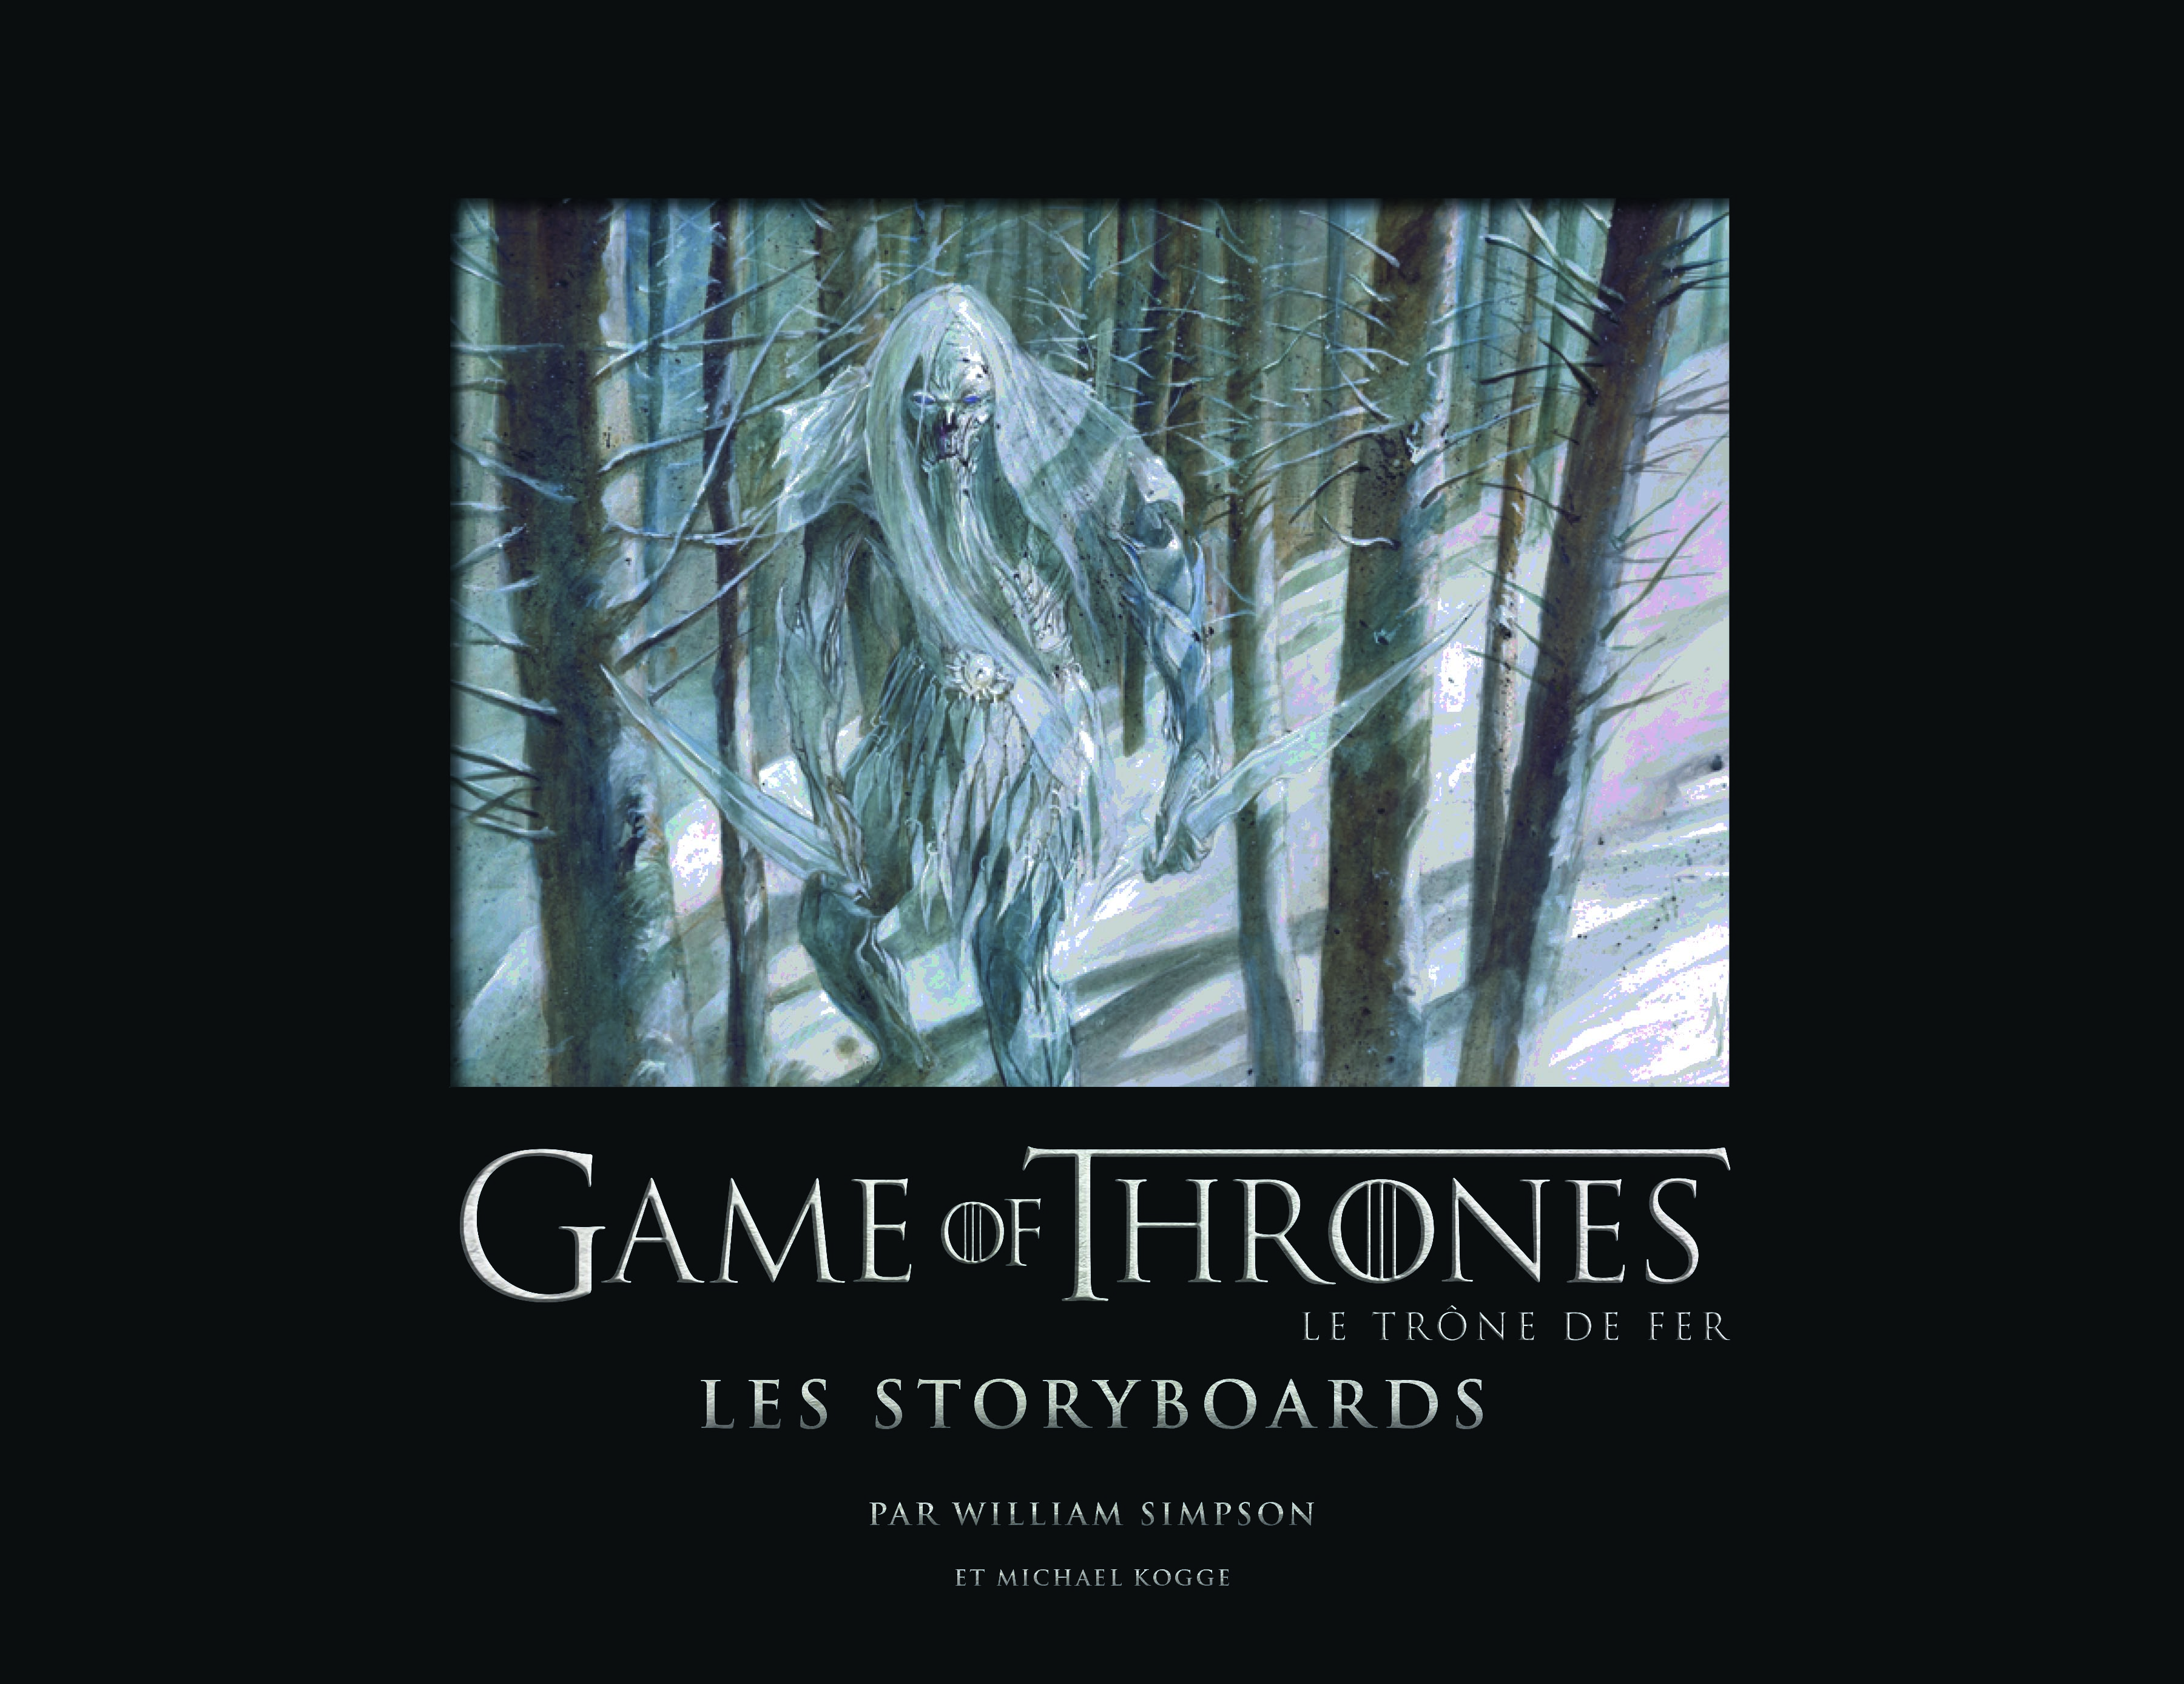 Couverture du premier volume "Game of Thrones : les Storyboards" (crédits : éditions 404)